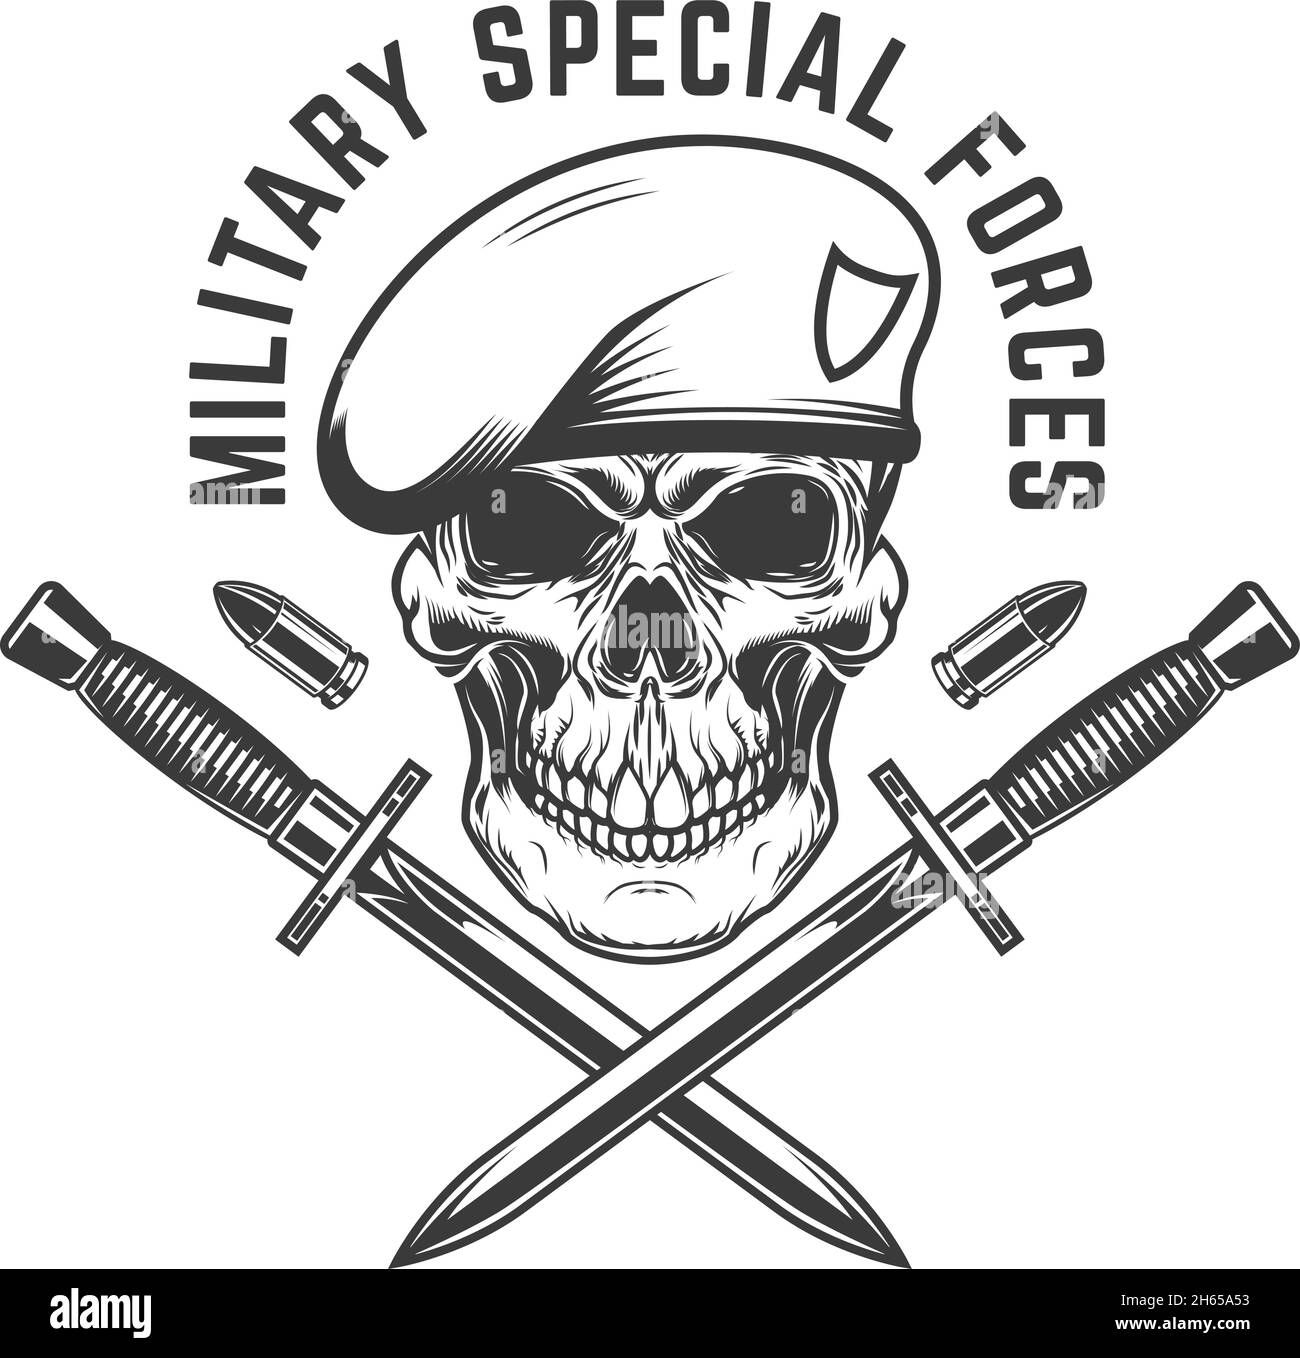 Military special forces. Paratrooper skull with crossed knives. Design element for logo, label, sign, emblem. Vector illustration Stock Vector